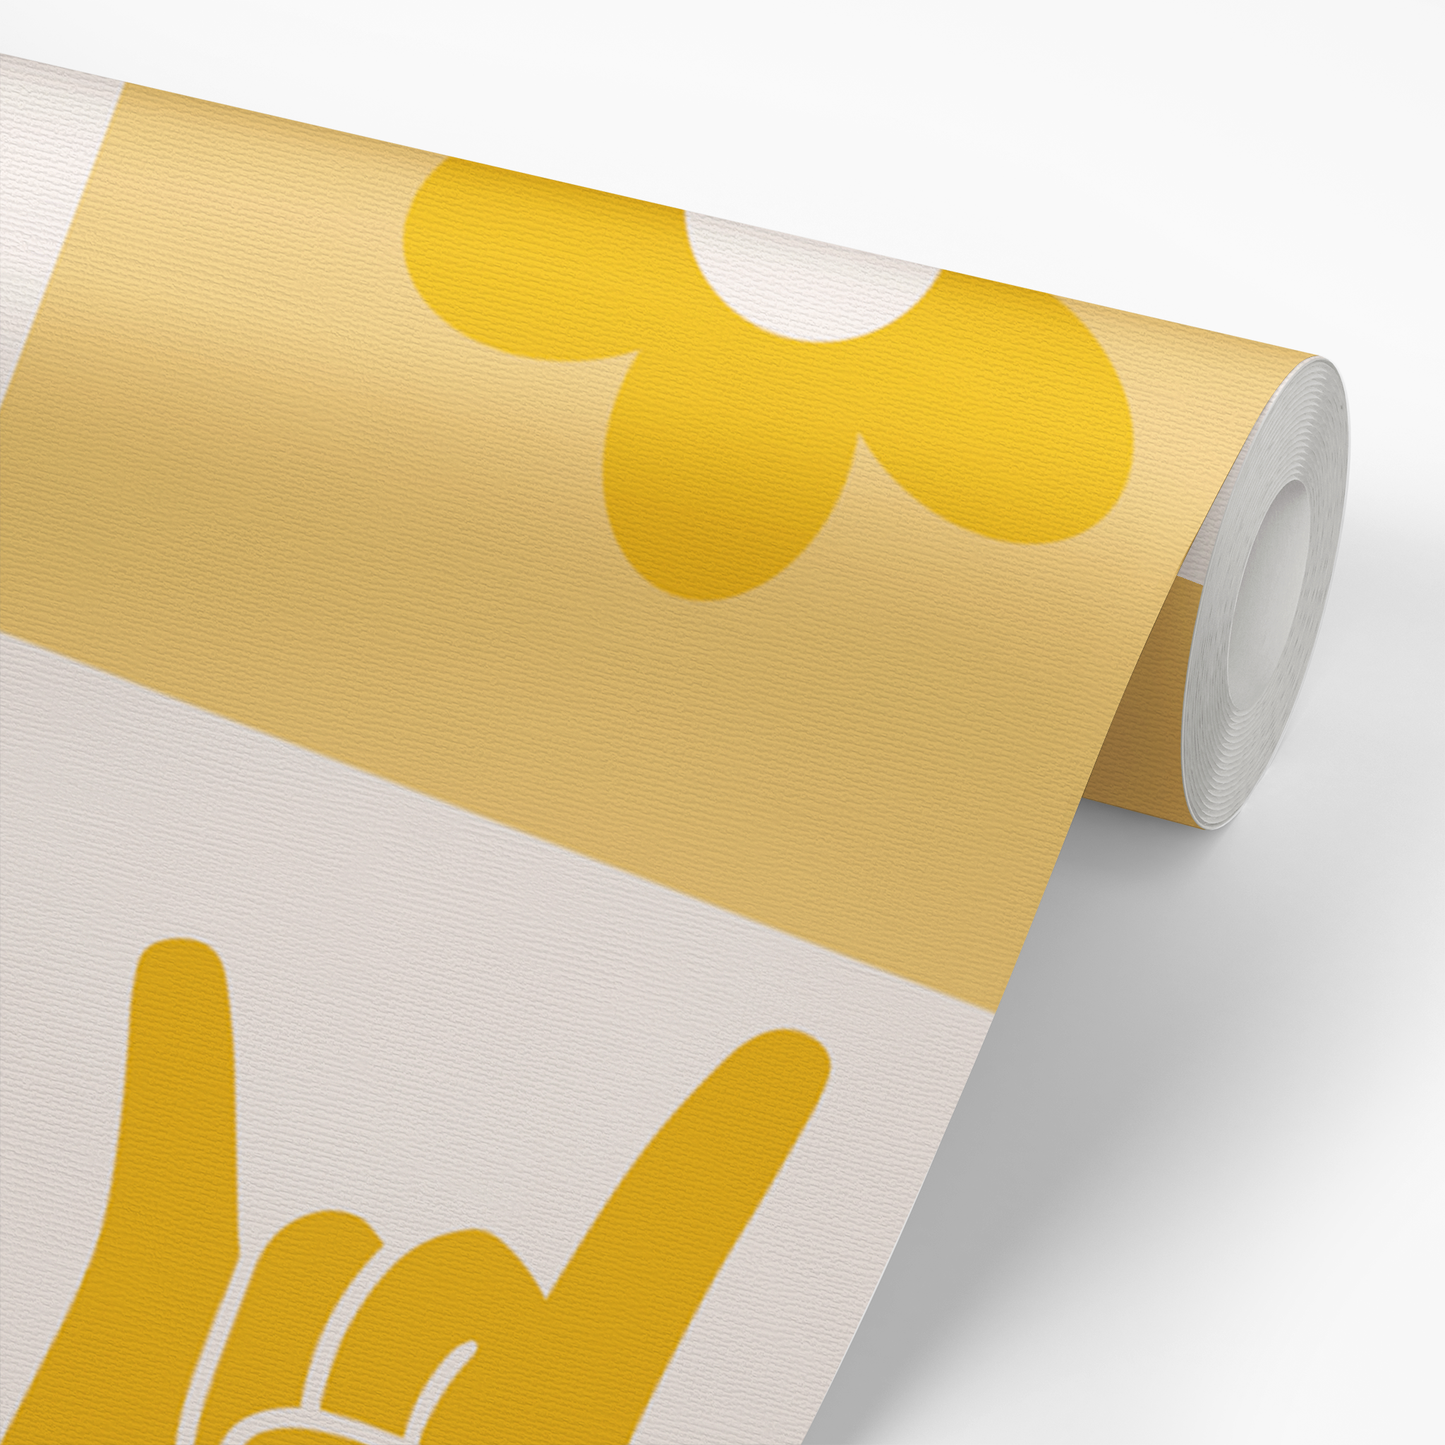 Retro Hand Signs Wallpaper - Yellow